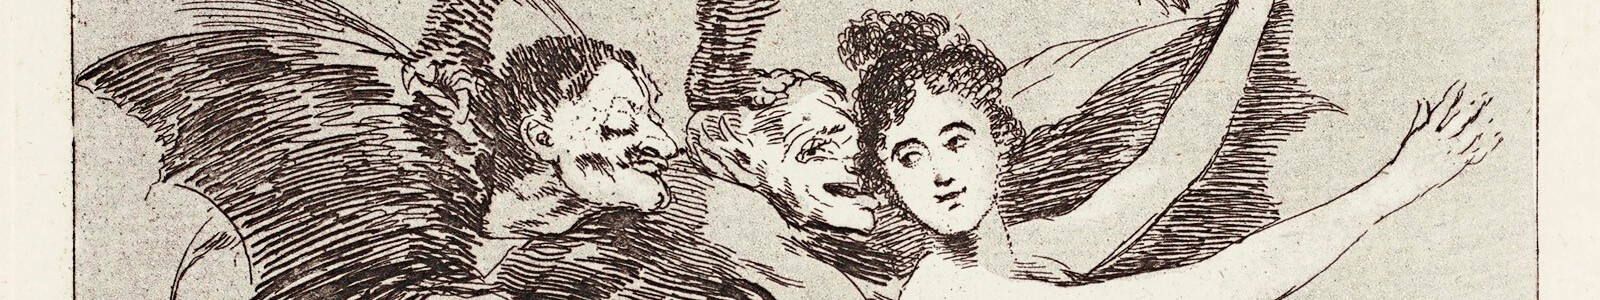 The Sleep of Reason: Francisco Goya's Los Caprichos